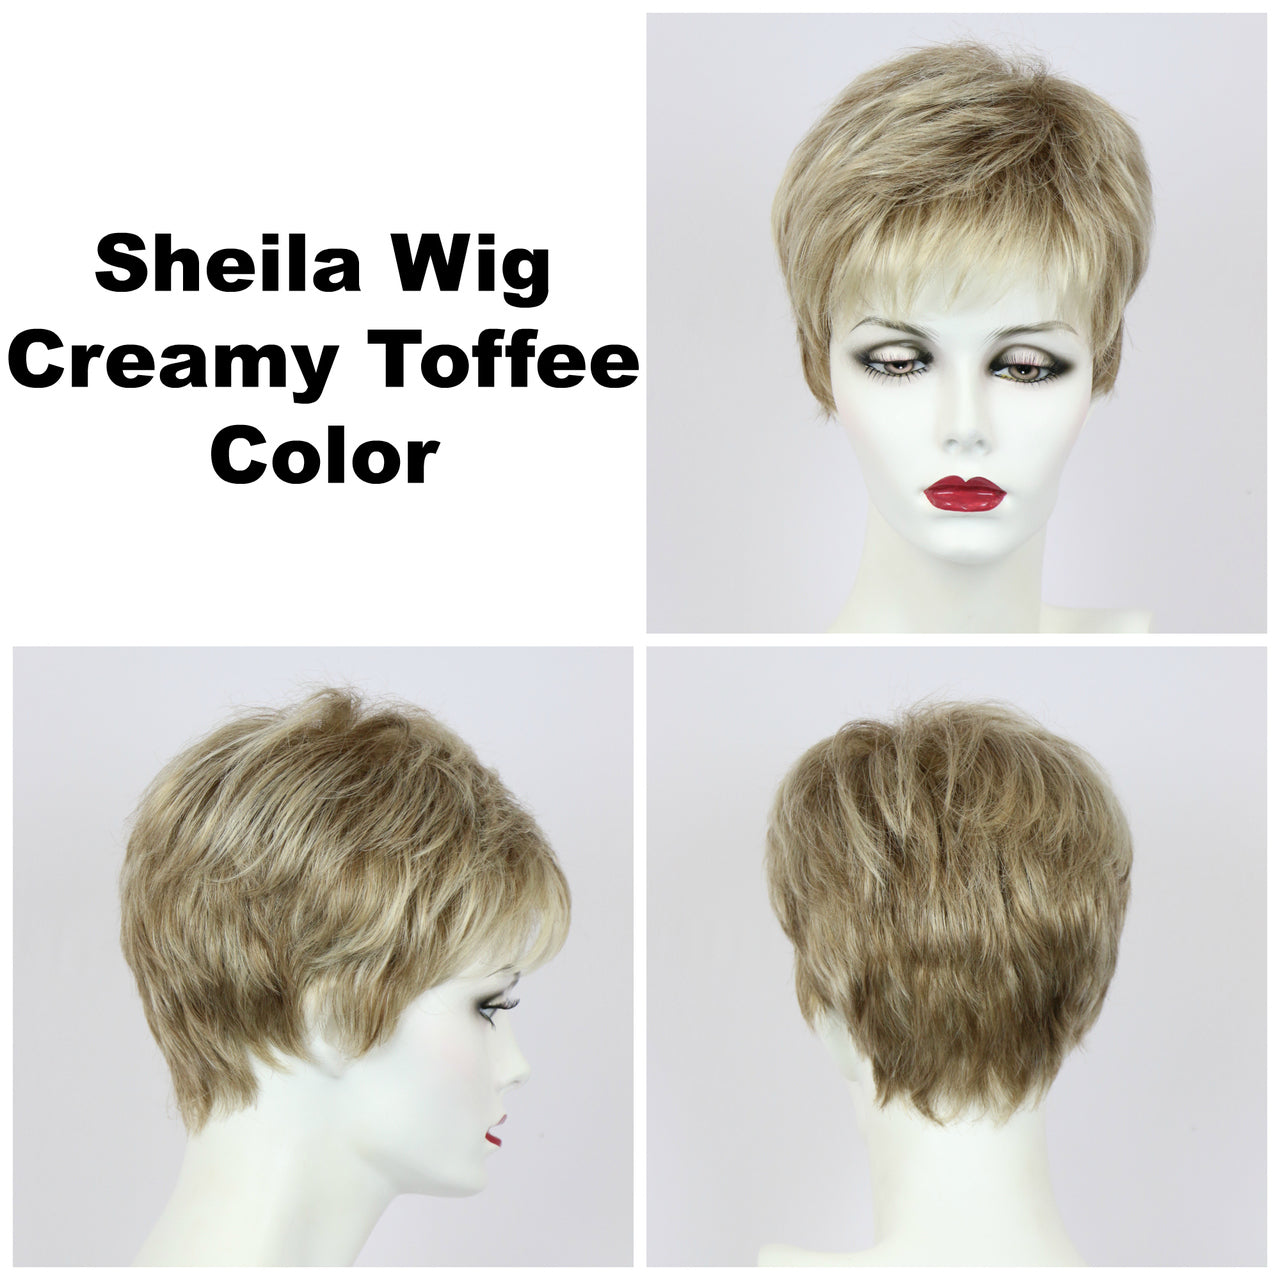 Creamy Toffee / Petite Sheila / Short Wig